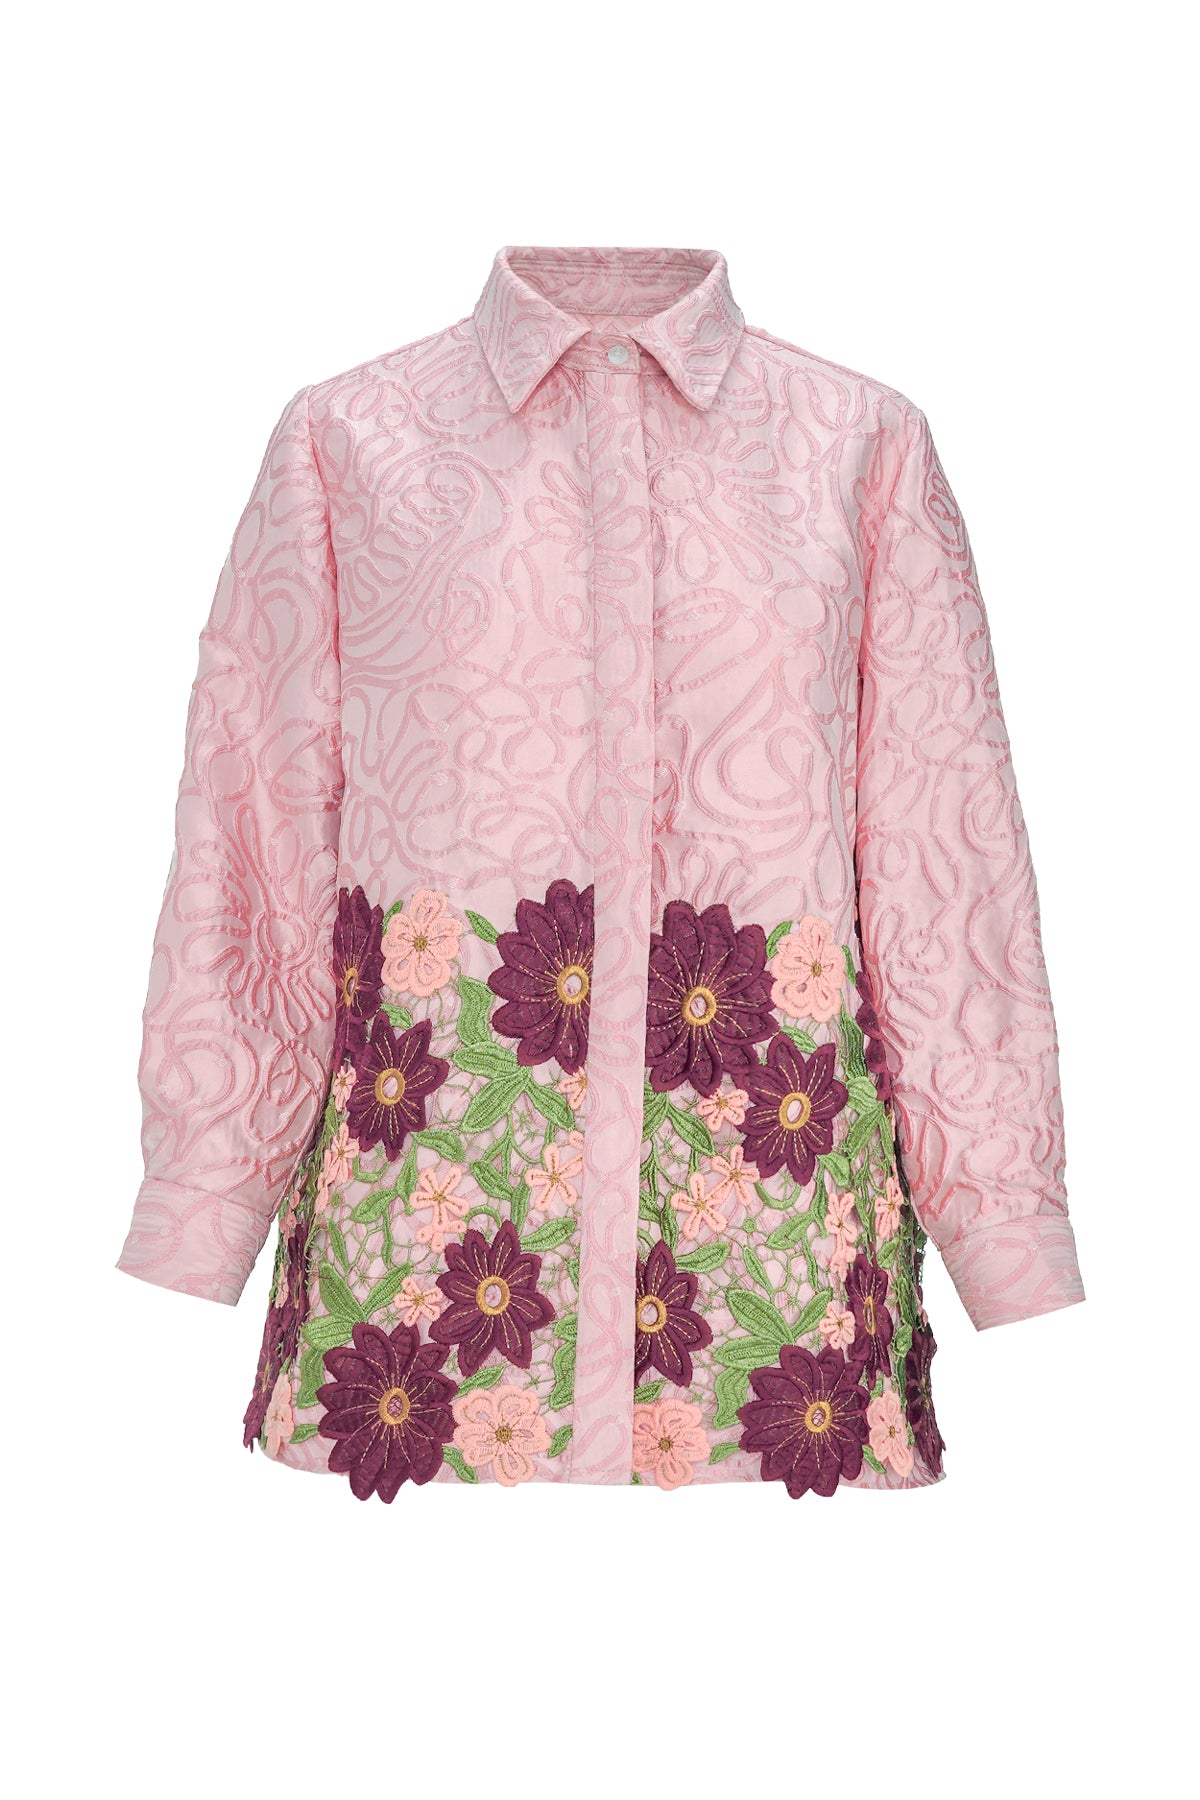 Rosye Lace Shirt - Pink